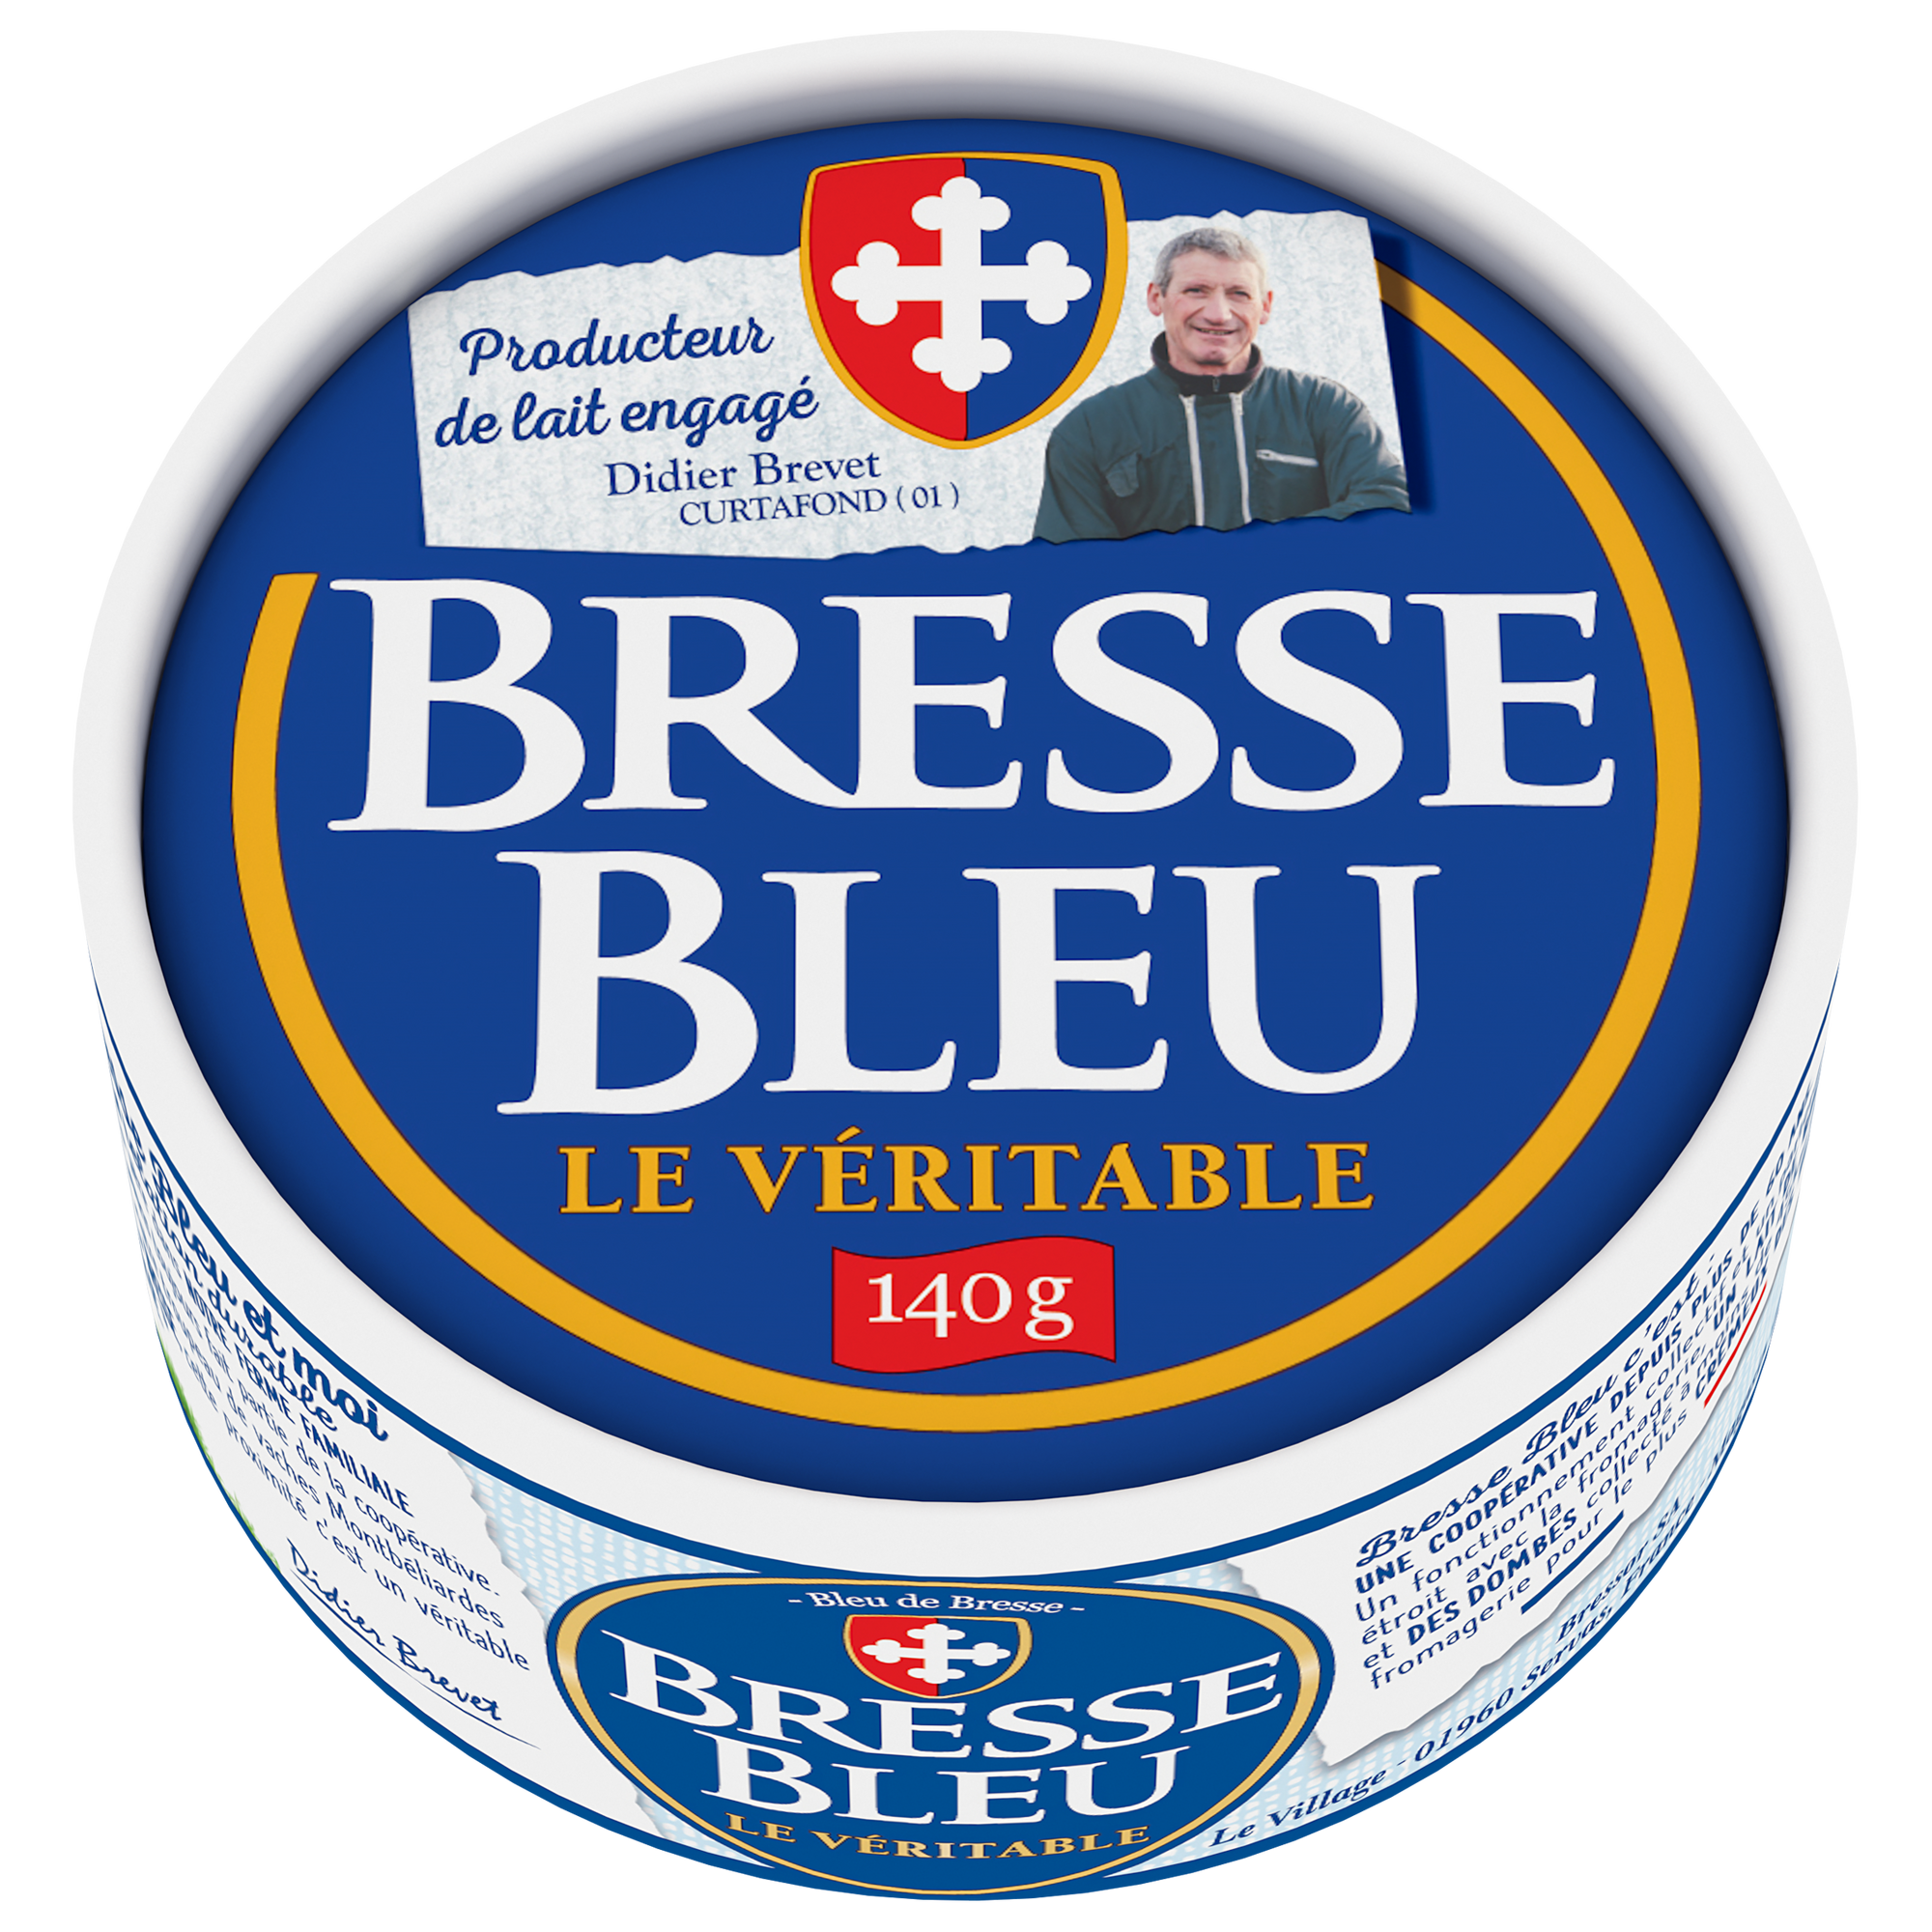 Bresse Bleu Le Véritable 140g